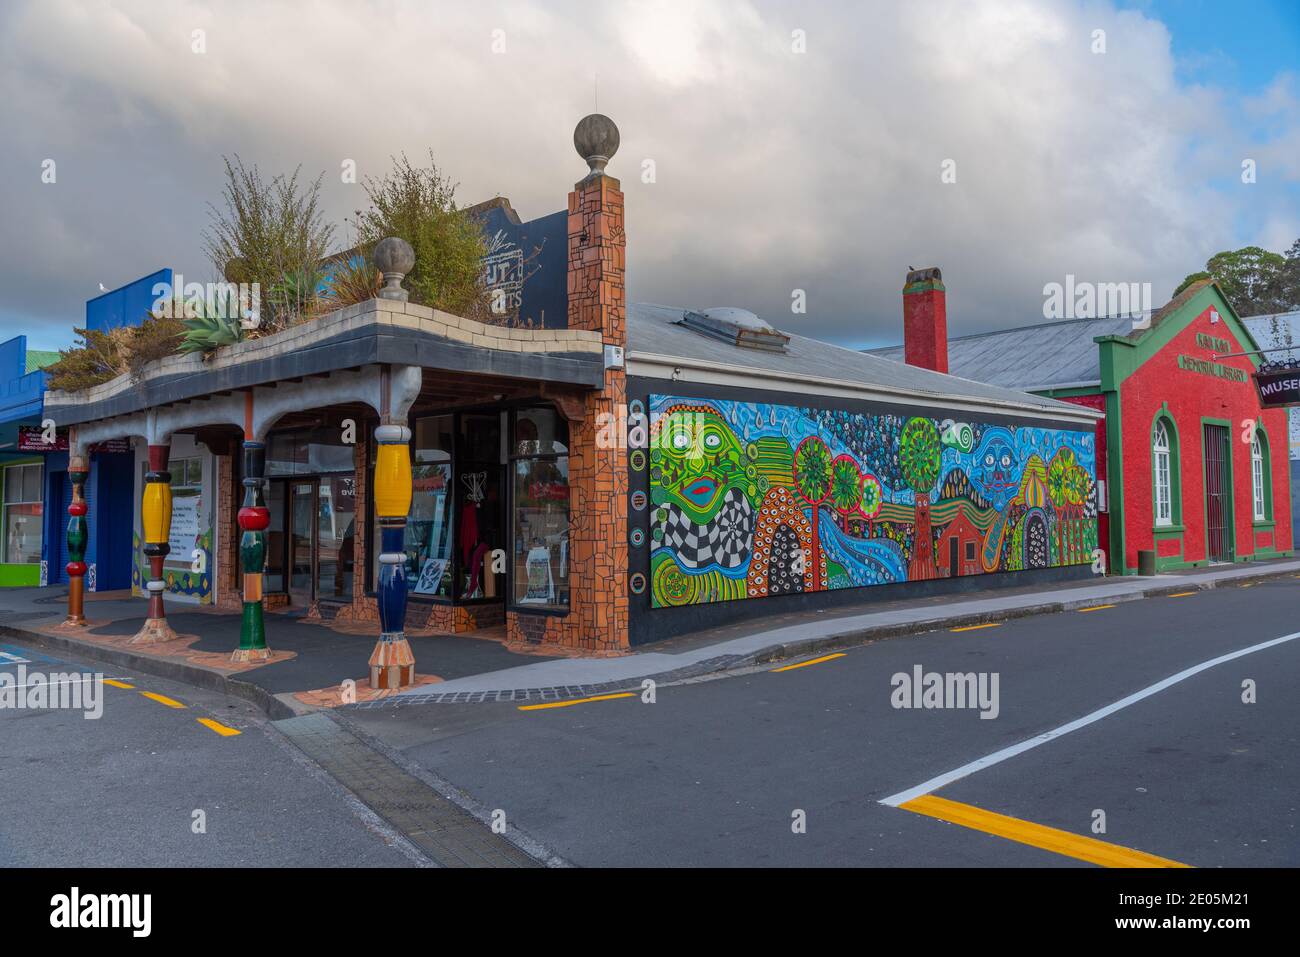 KAWAKAWA, NEW ZEALAND, FEBRUARY 17, 2020: Street art in Hundertwasser style at Kawakawa, New Zealand Stock Photo